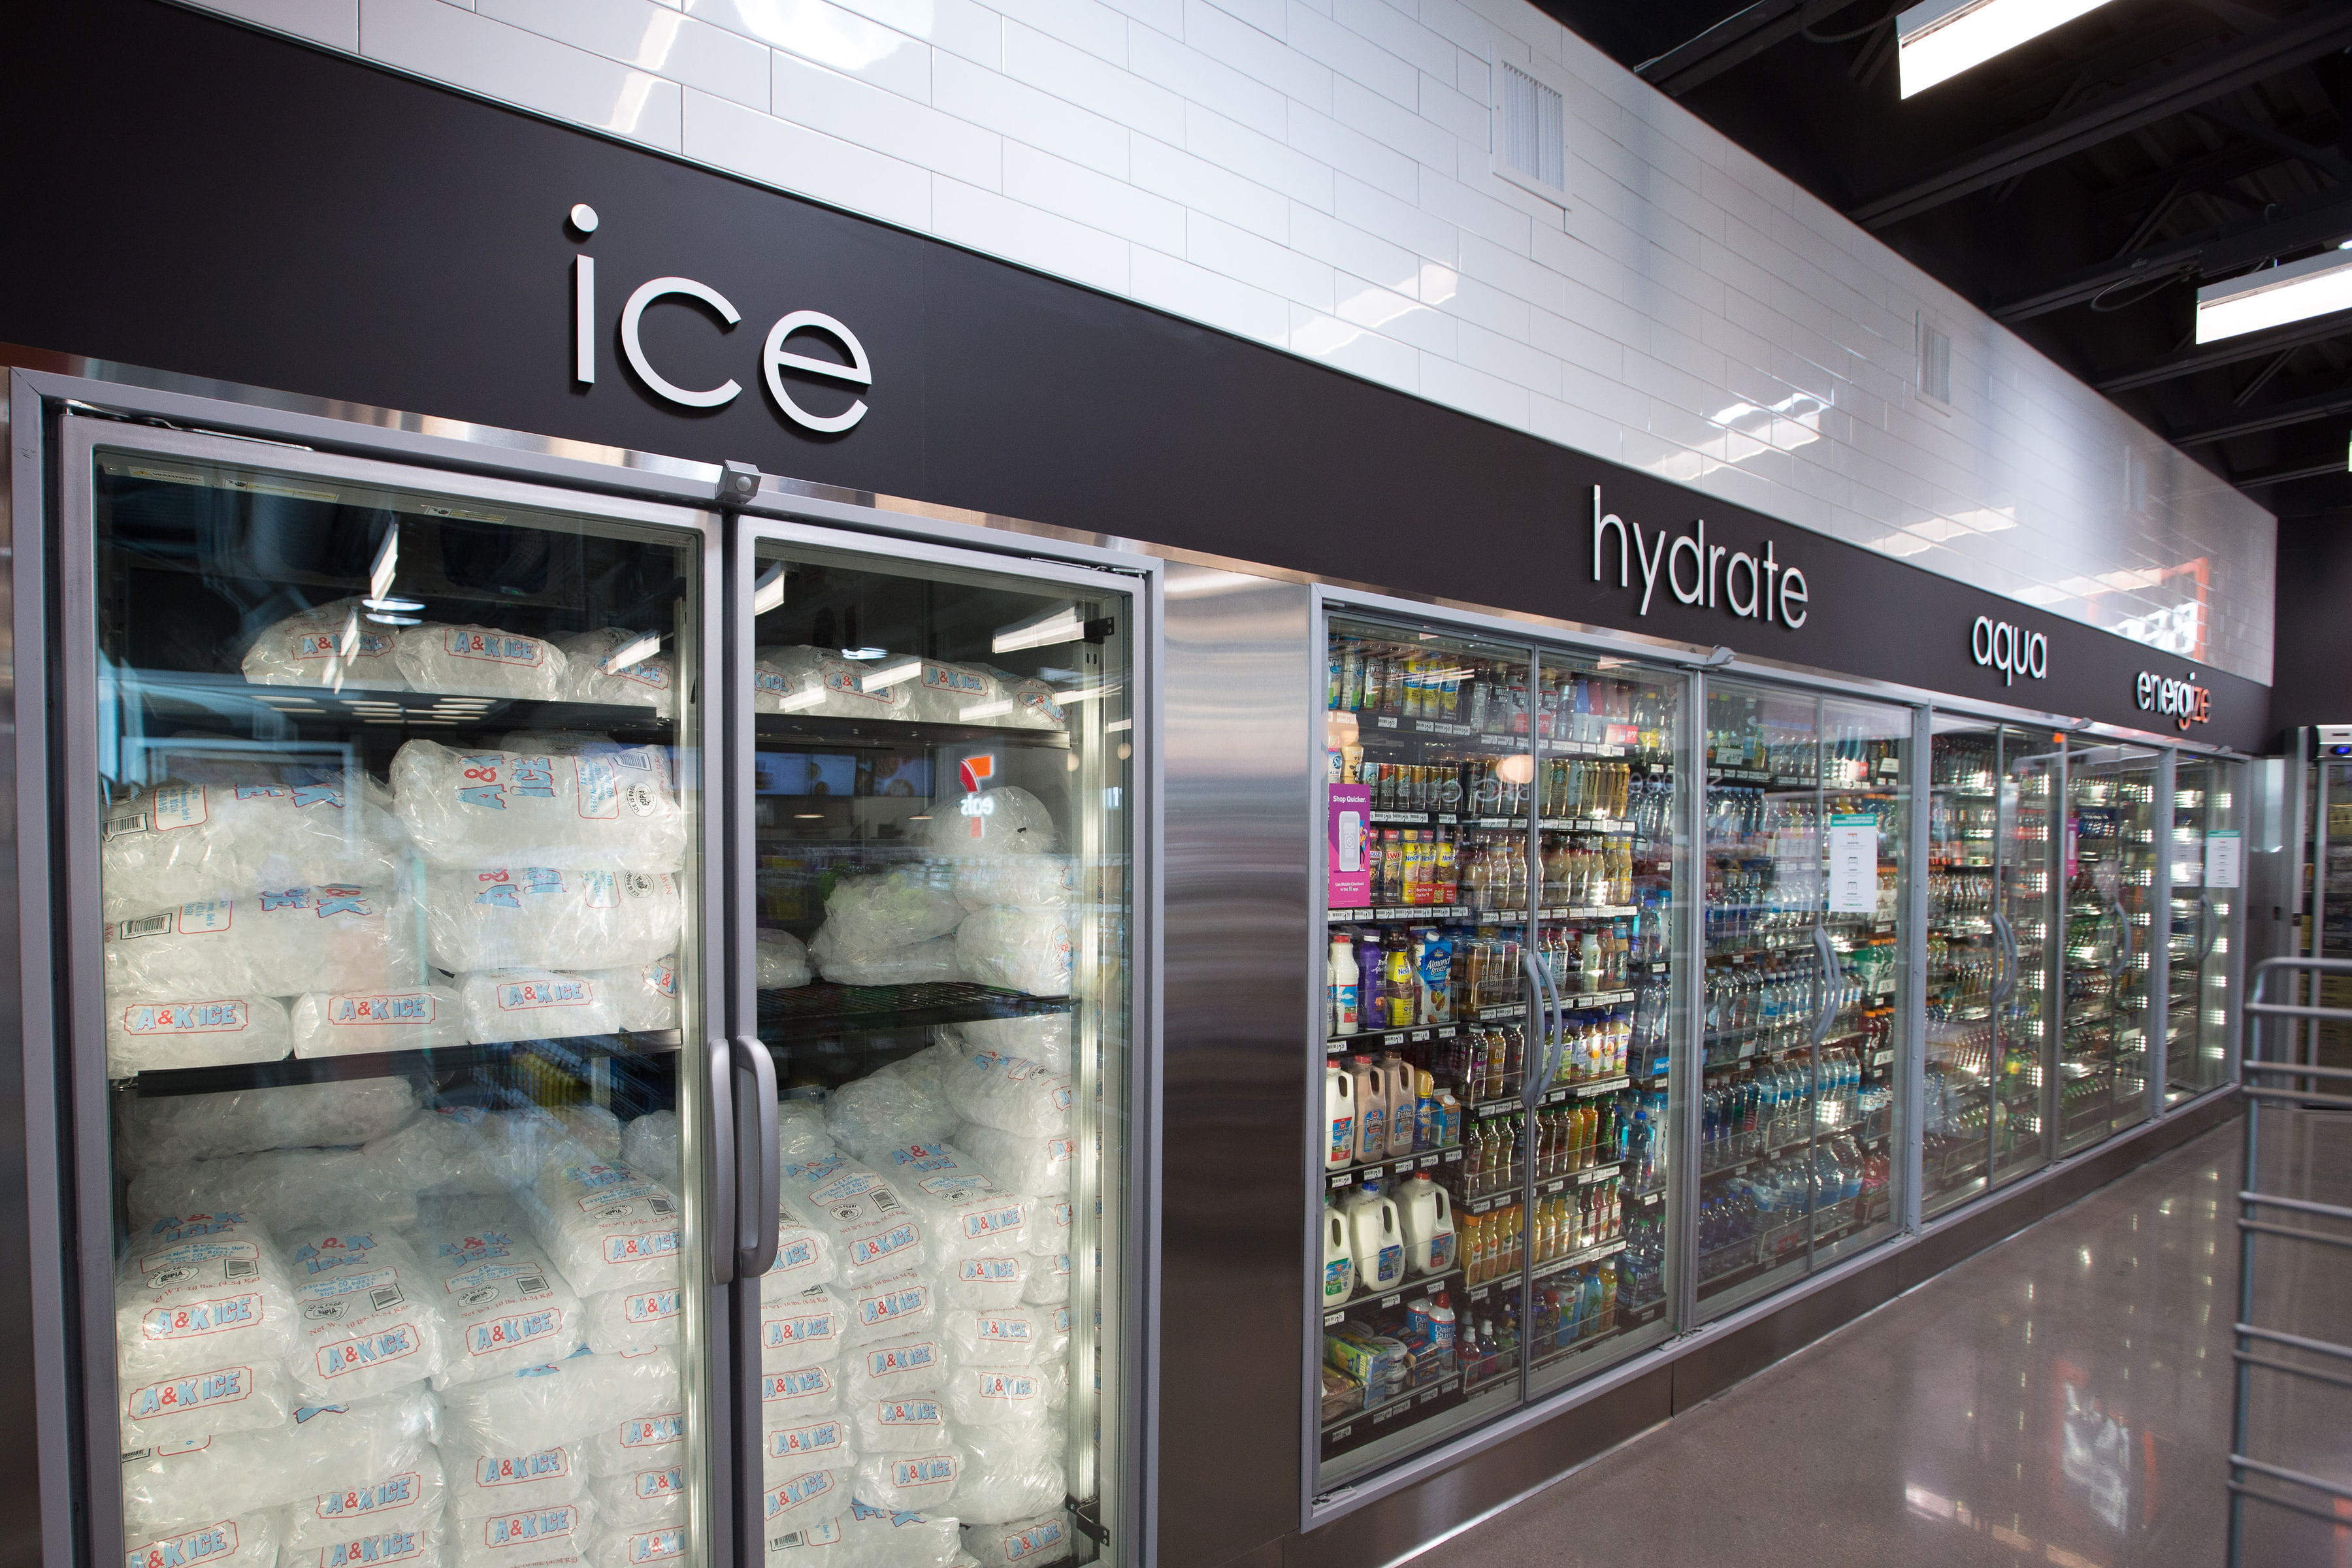 in store photo of ice merchandiser